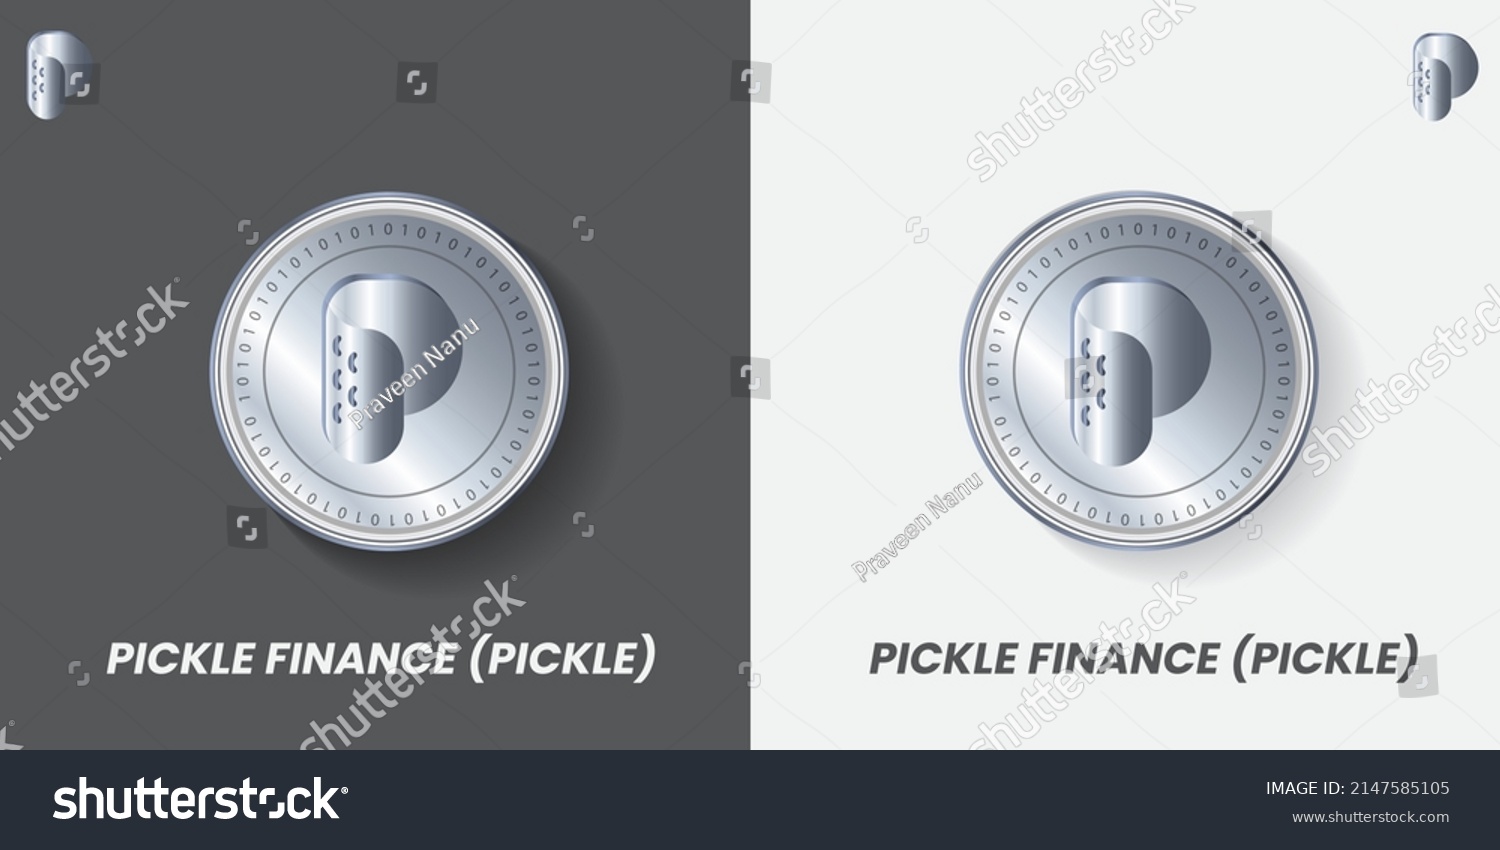 pickle crypto